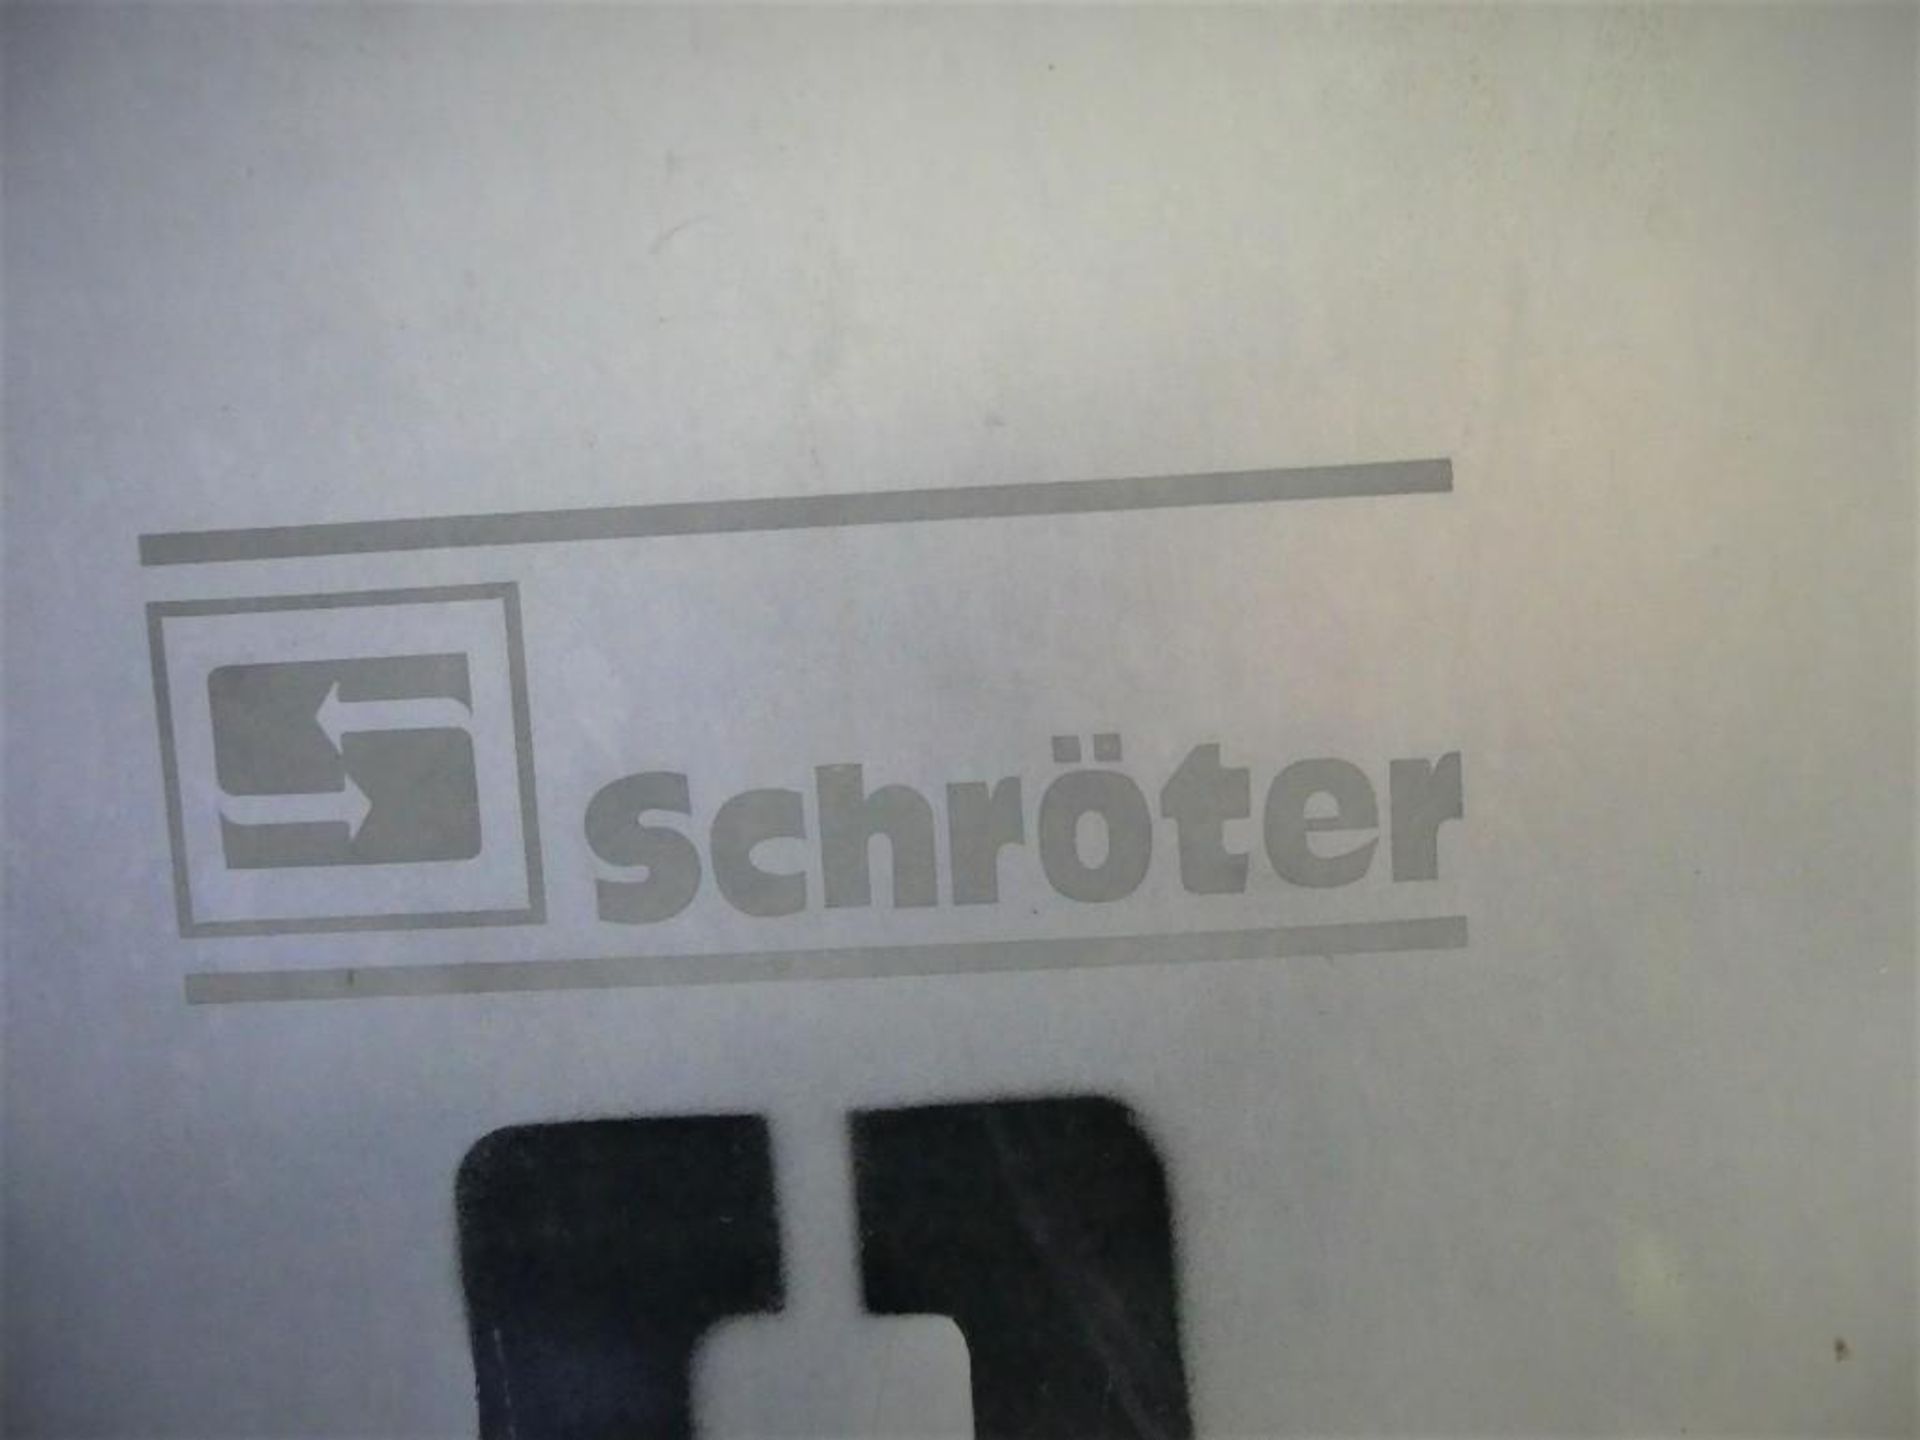 Schroeter Smoke Generator - Image 16 of 21